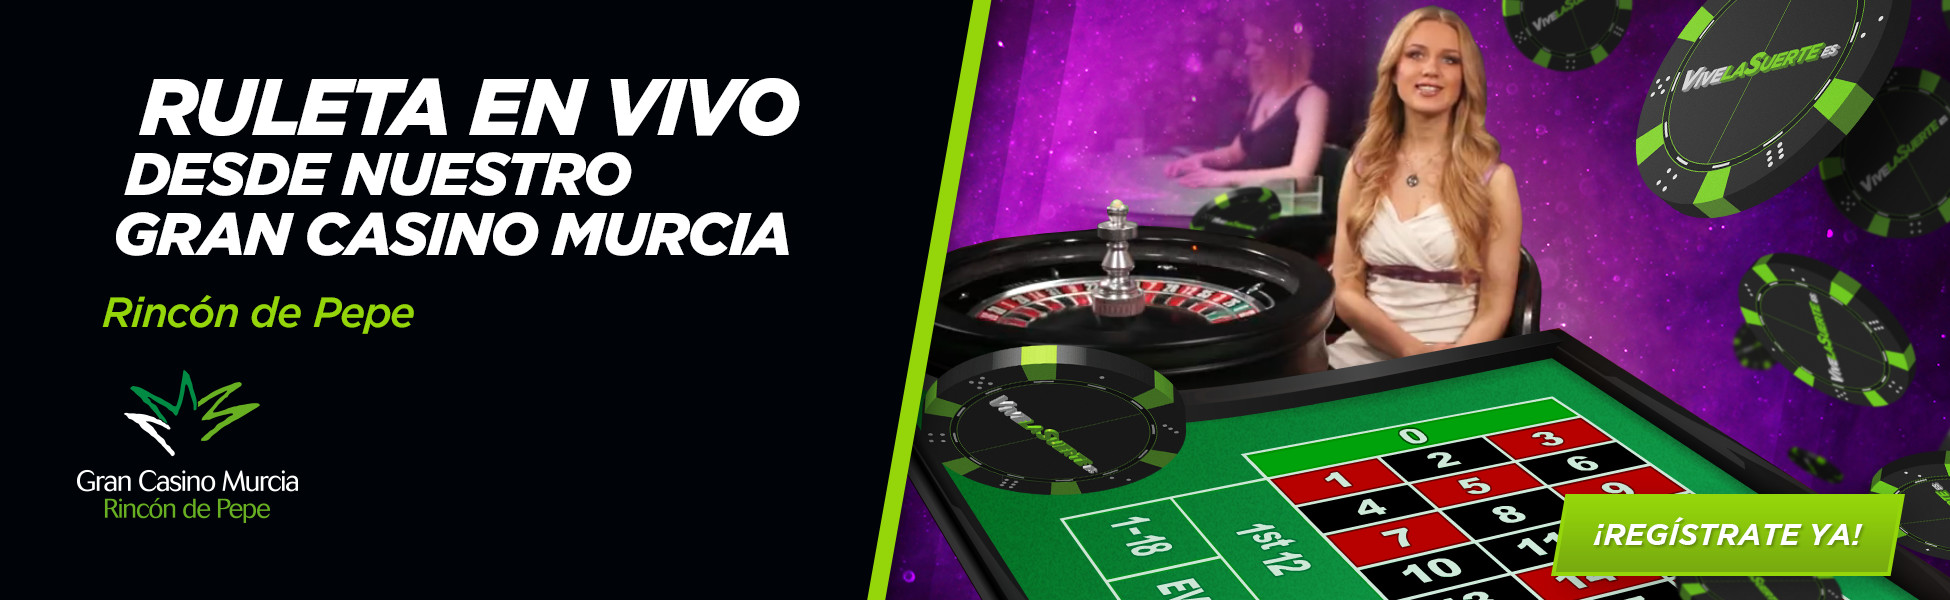 Simulador de ruleta bono bet365 Brasília 450405